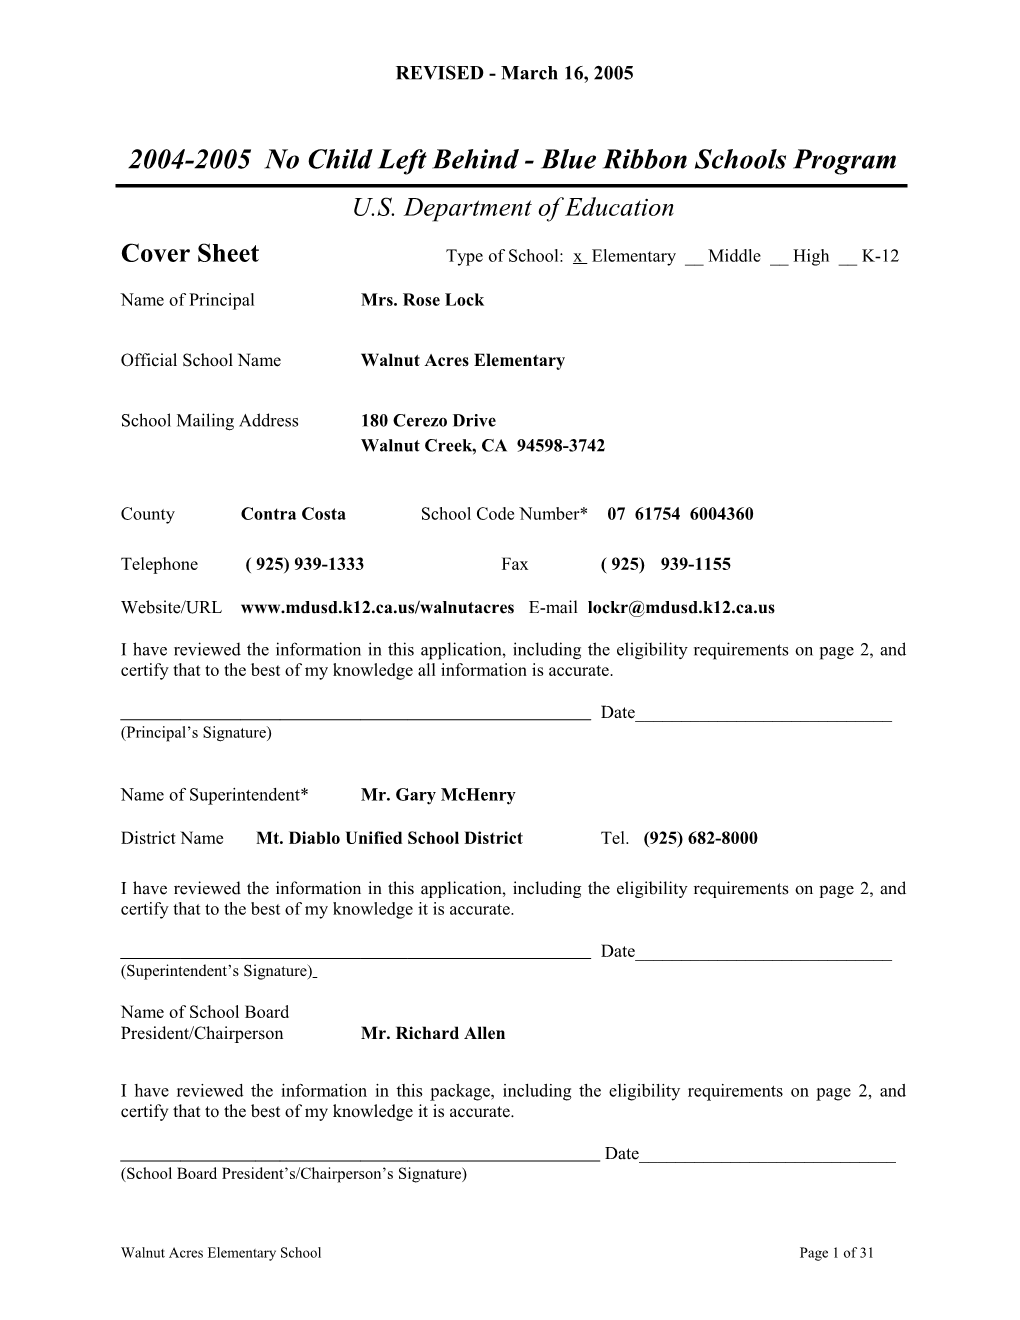 Walnut Acres Elementary School Application: 2004-2005, No Child Left Behind - Blue Ribbon